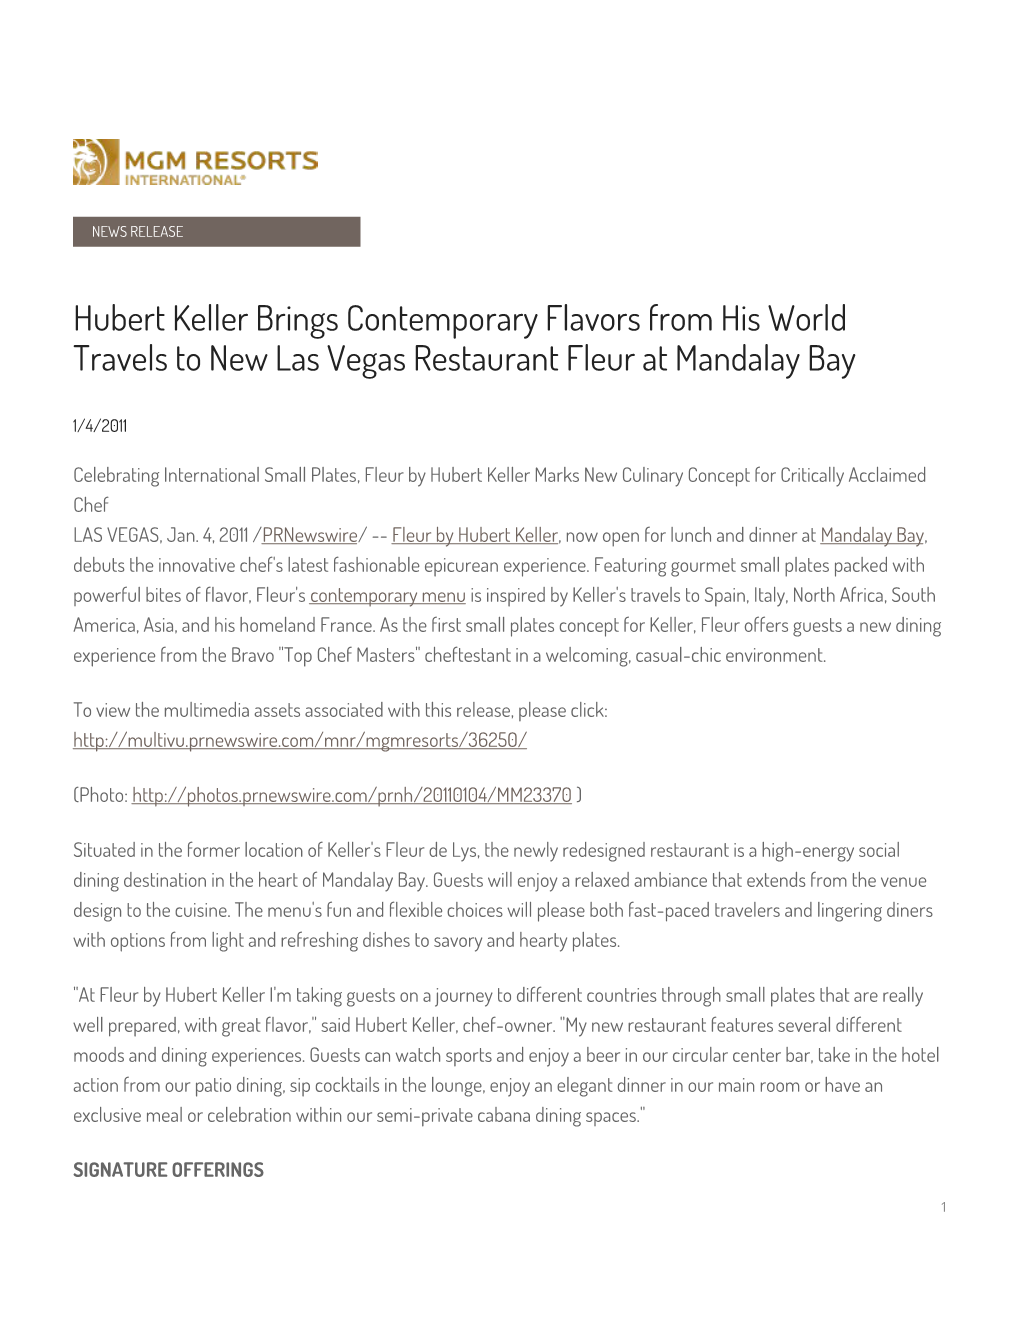 Hubert Keller Brings Contemporary Flavors from His World Travels to New Las Vegas Restaurant Fleur at Mandalay Bay